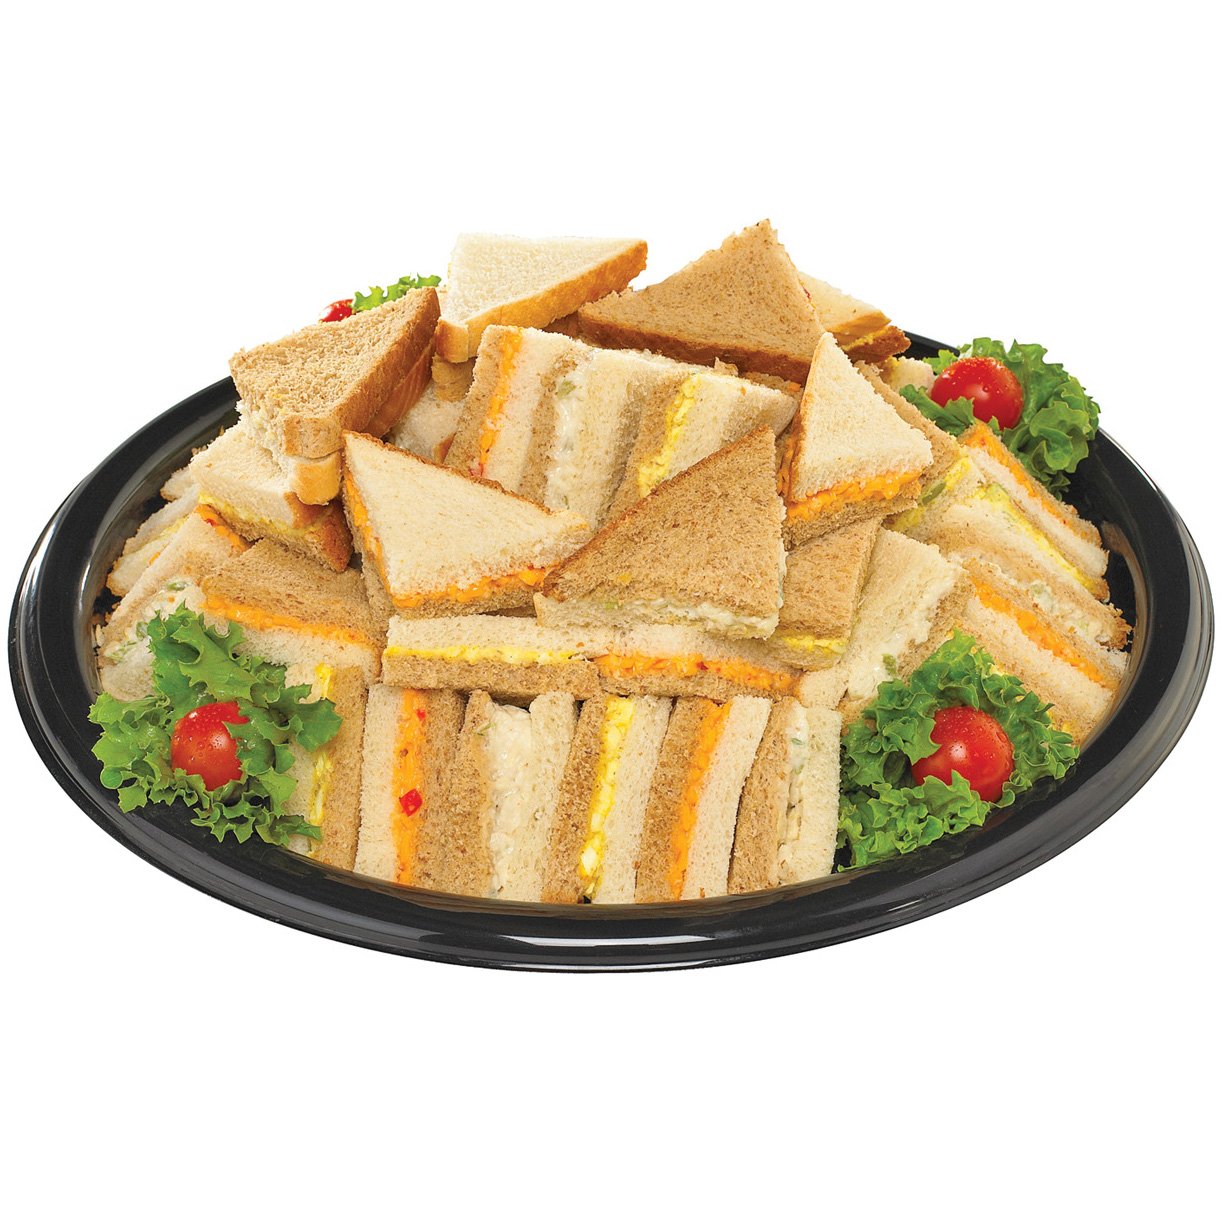 H-E-B Salad Sandwich Party Tray, Serves 10-25 - Shop Custom Party Trays ...